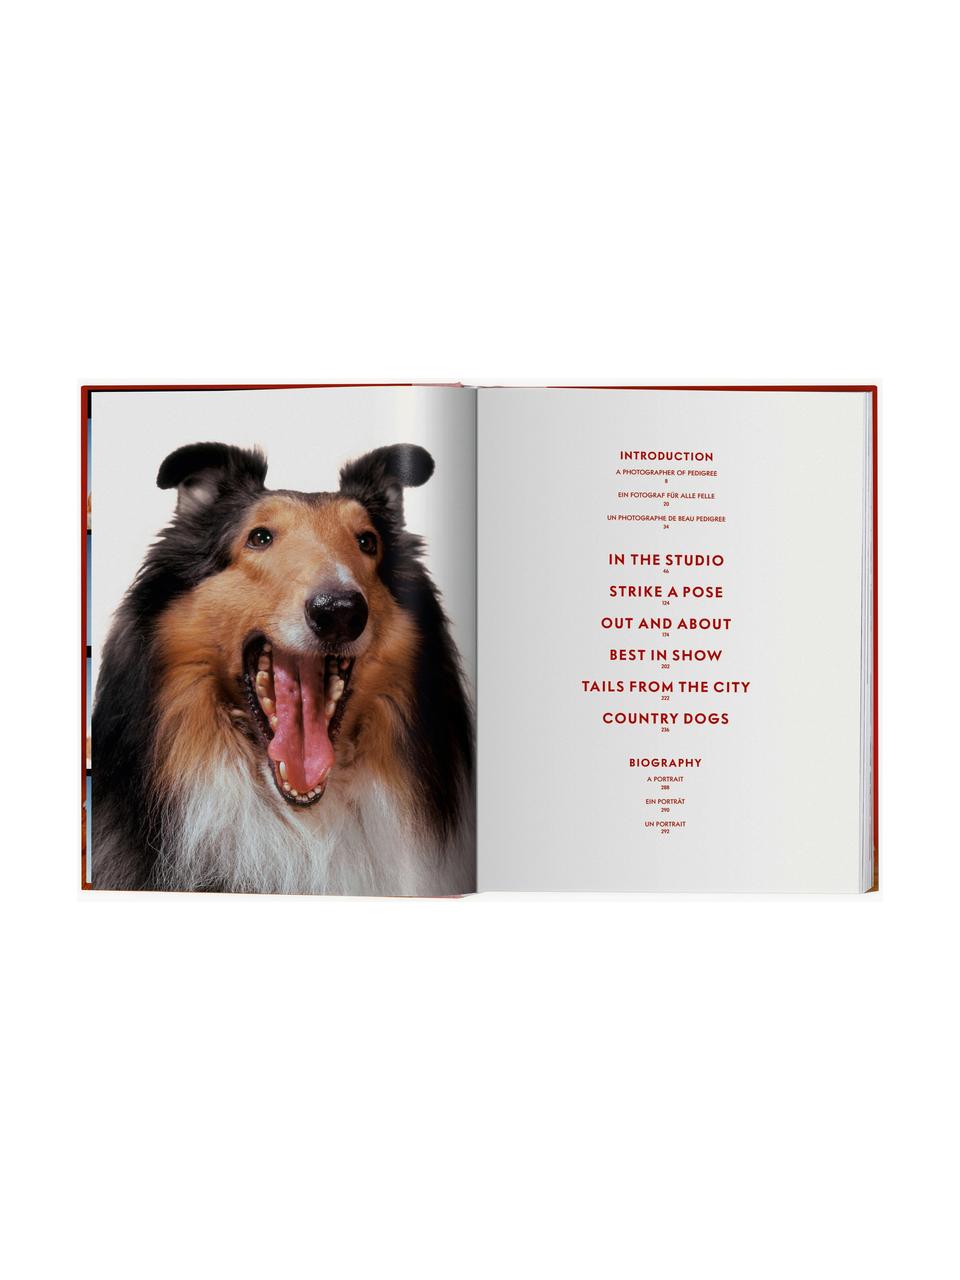 Geïllustreerd boek Dogs Photographs 1941–1991, Papier, hardcover, Dogs Photographs 1941–1991, B 24 x H 32 cm